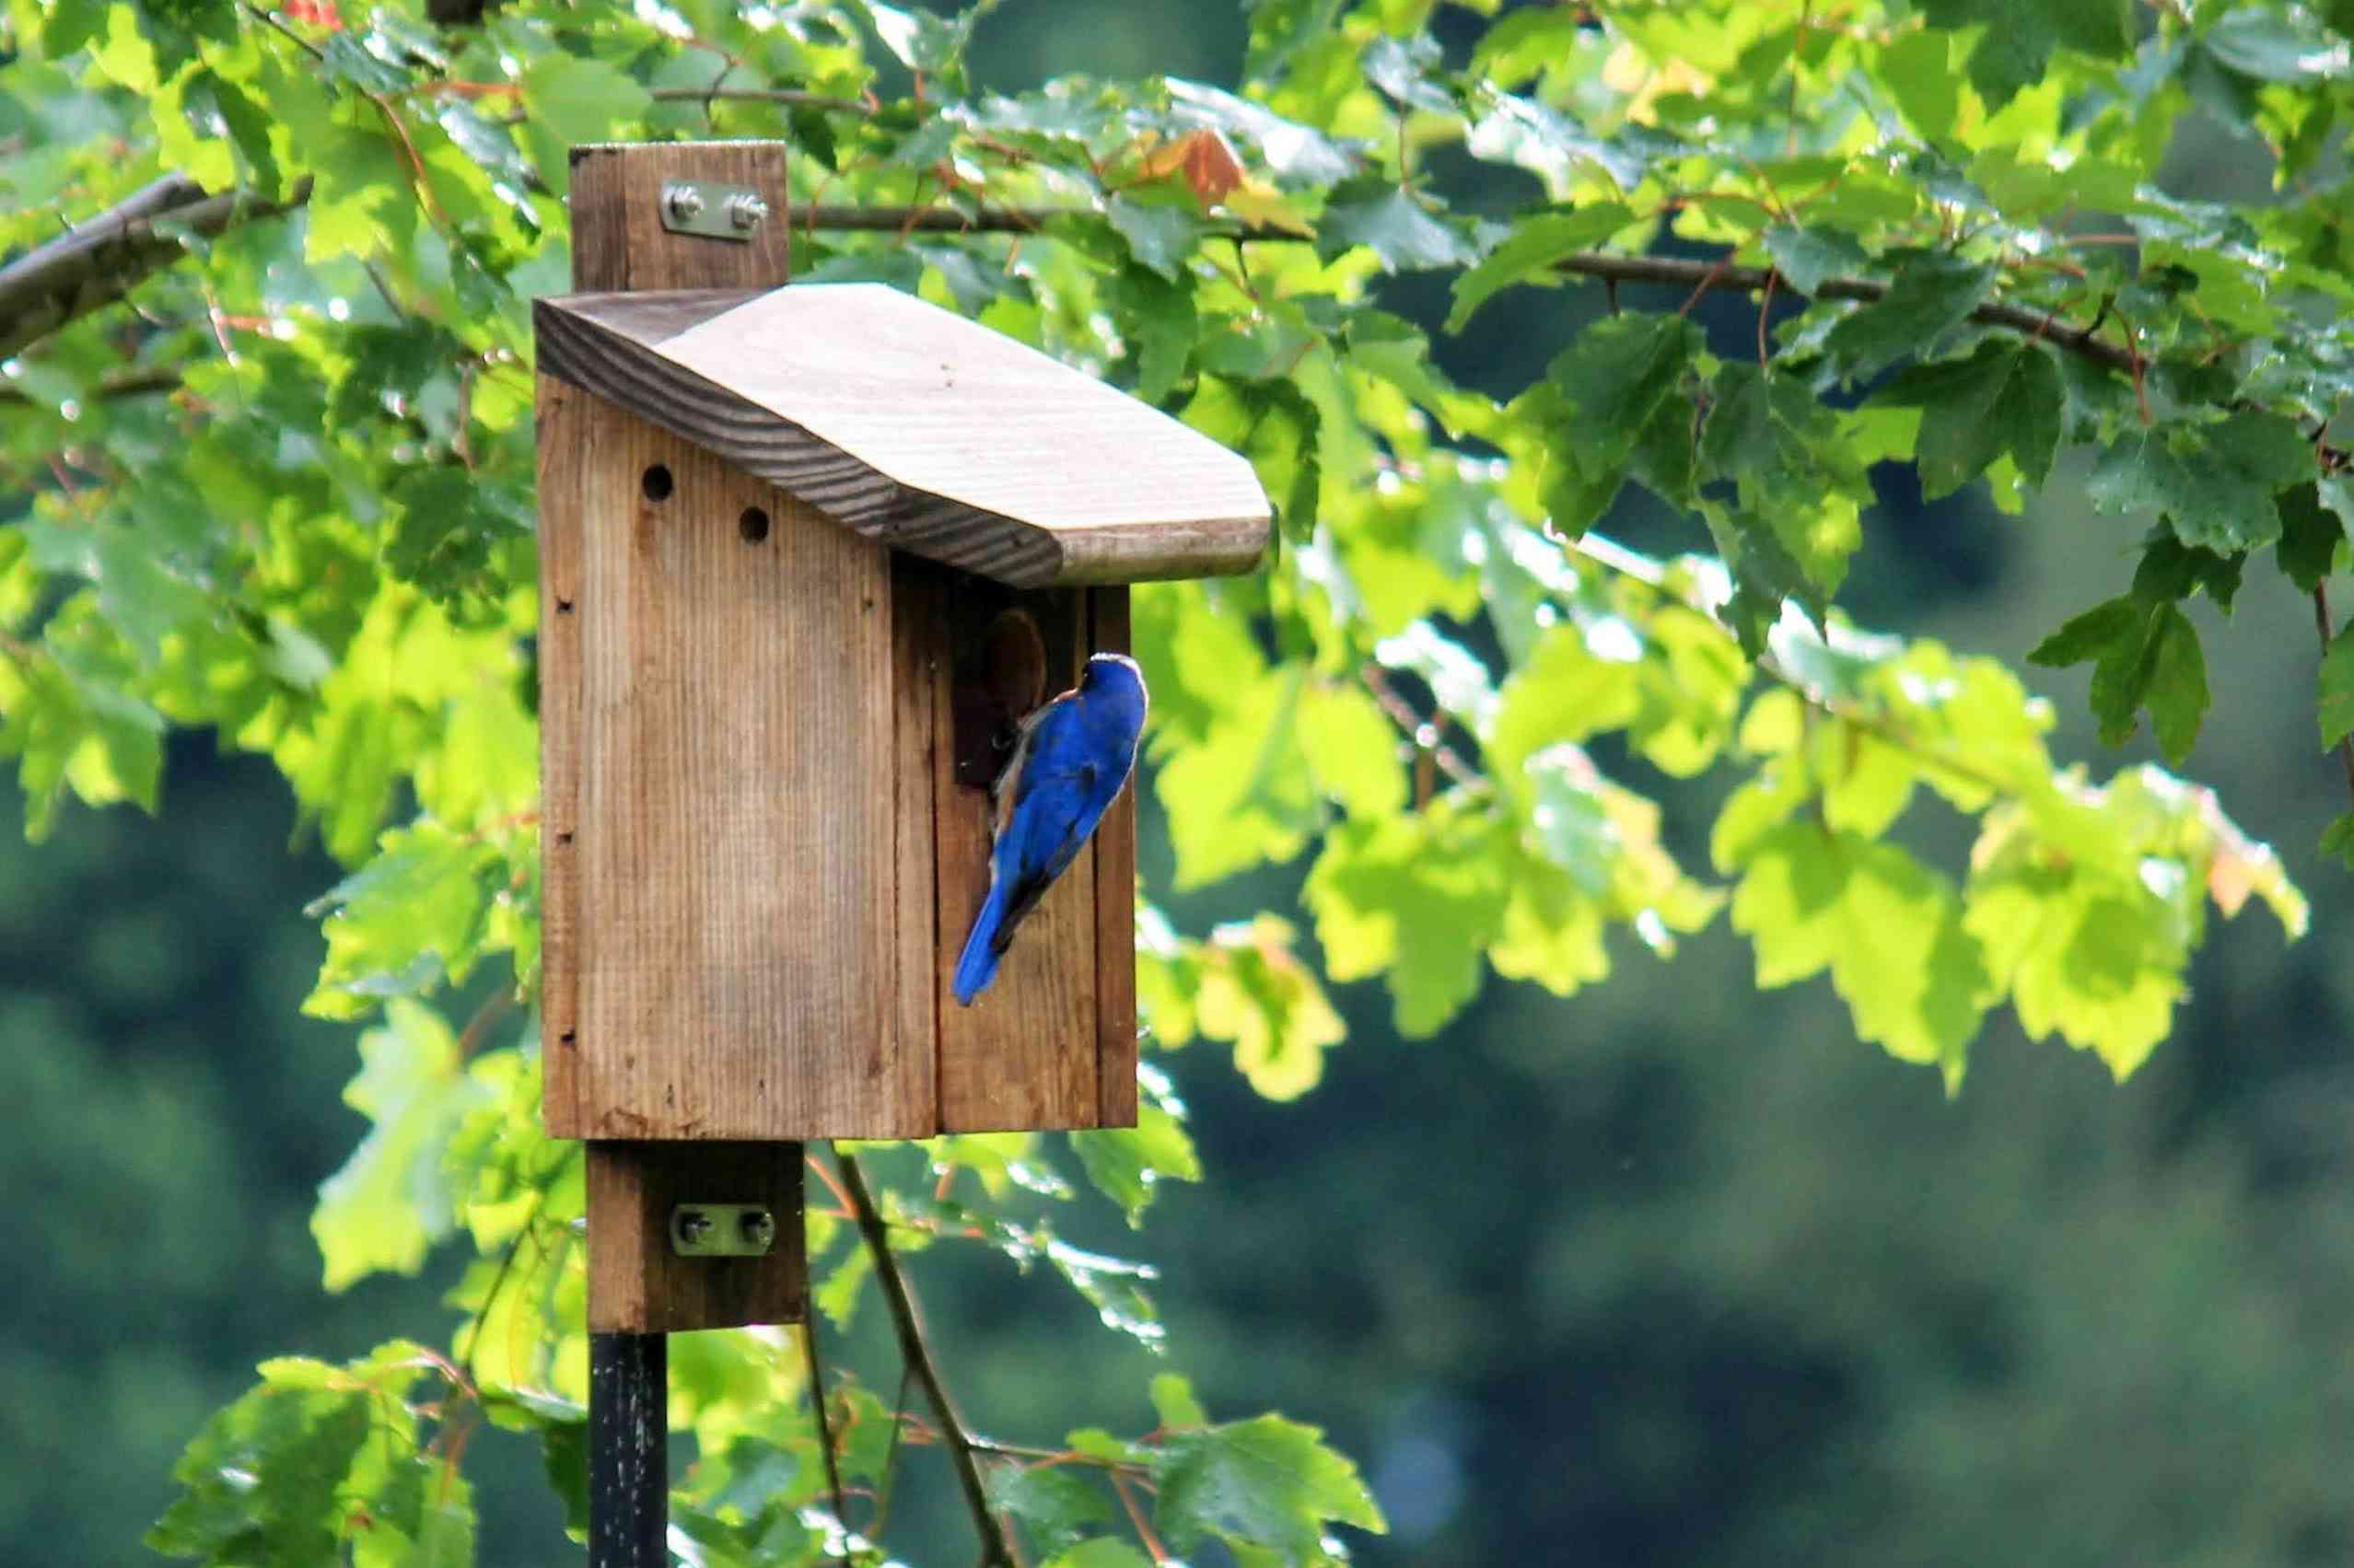 Construct a House for Bluebirds